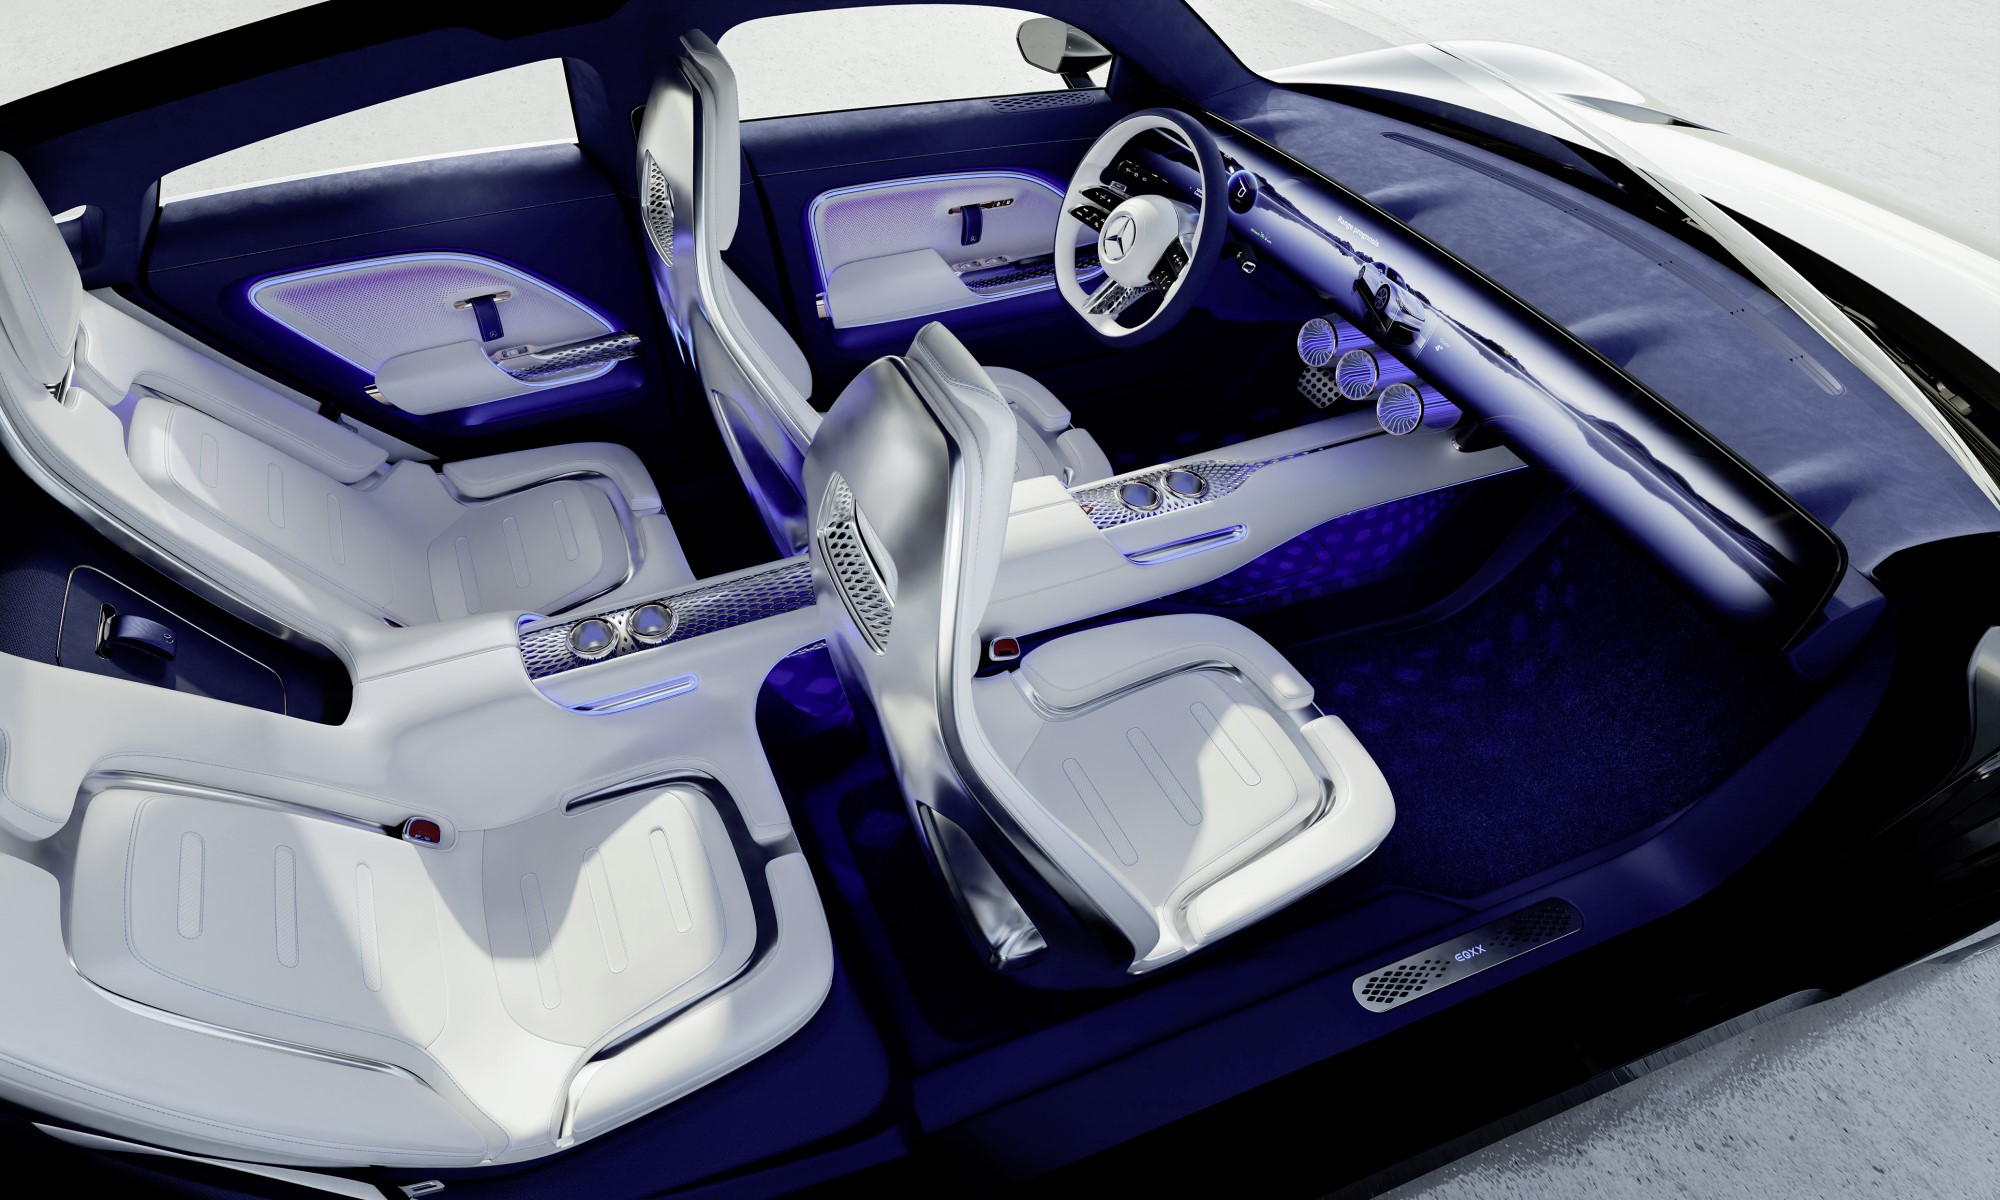 Mercedes-Benz Vision EQXX cabin